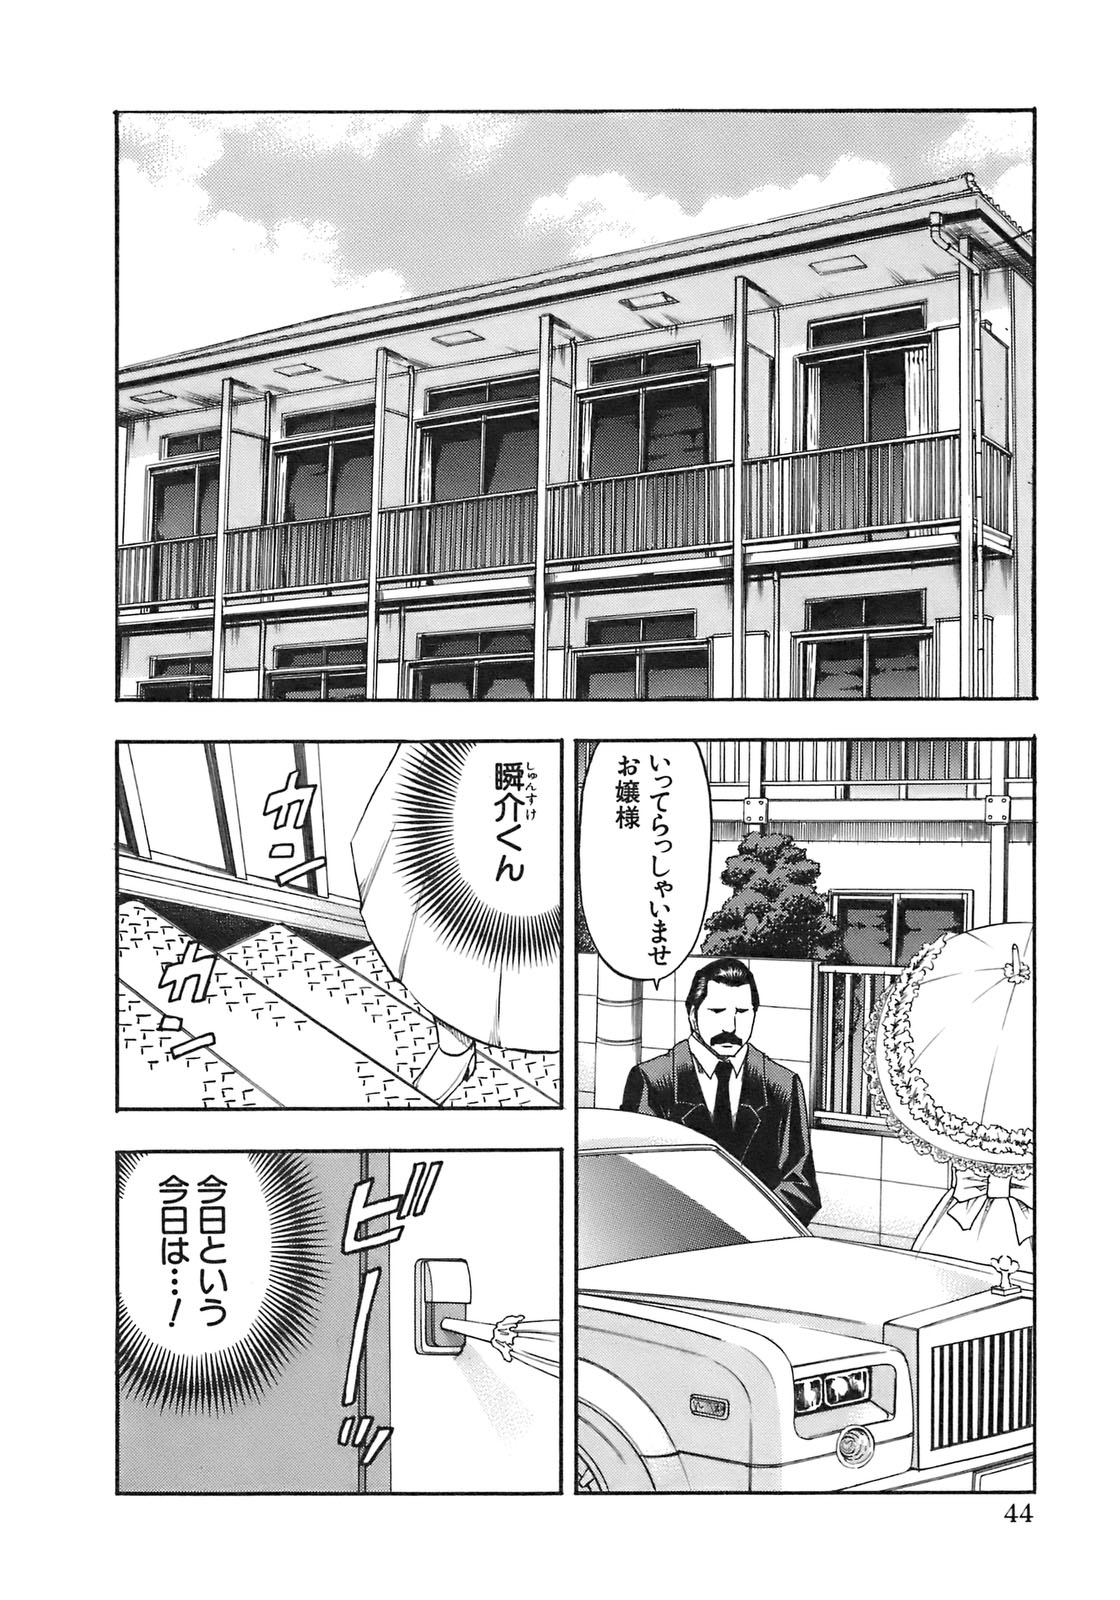 [Shigemitsu Harada &amp; Nobuto Hagio] Yuria 100 Shiki Vol.11 [原田重光X萩尾ノブト] ユリア100式 11